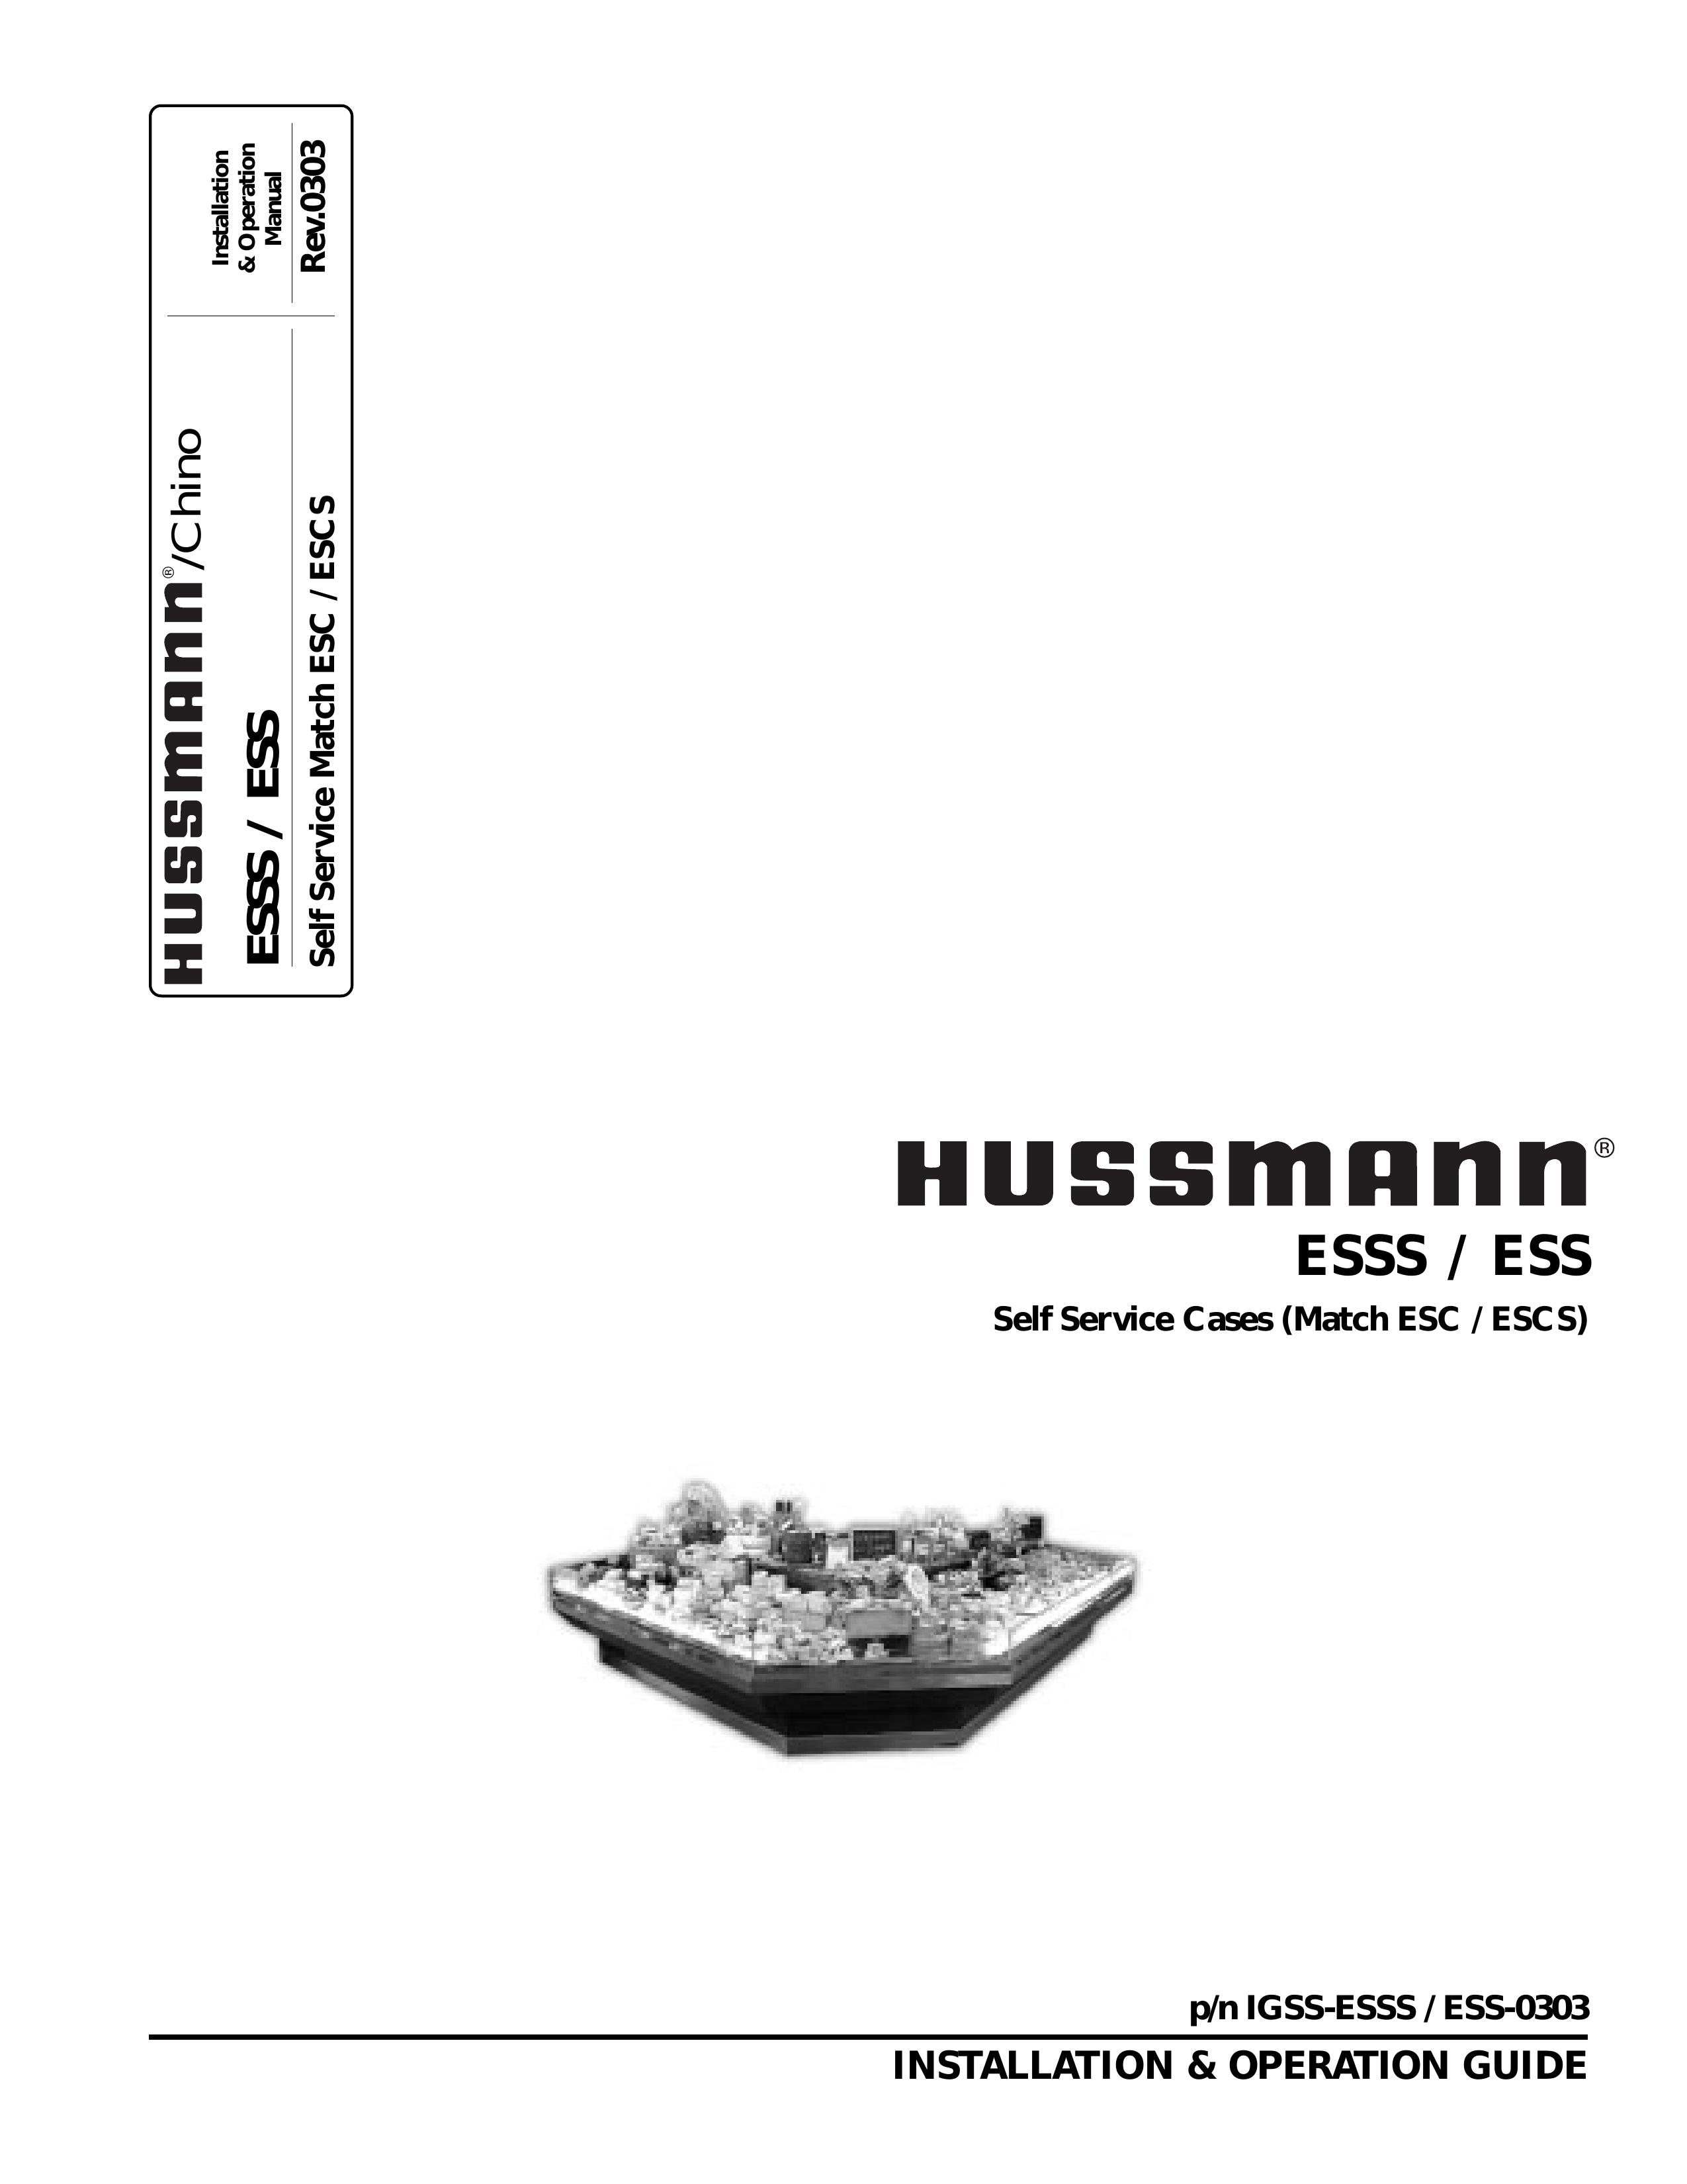 hussman ESSS-0303 Refrigerator User Manual